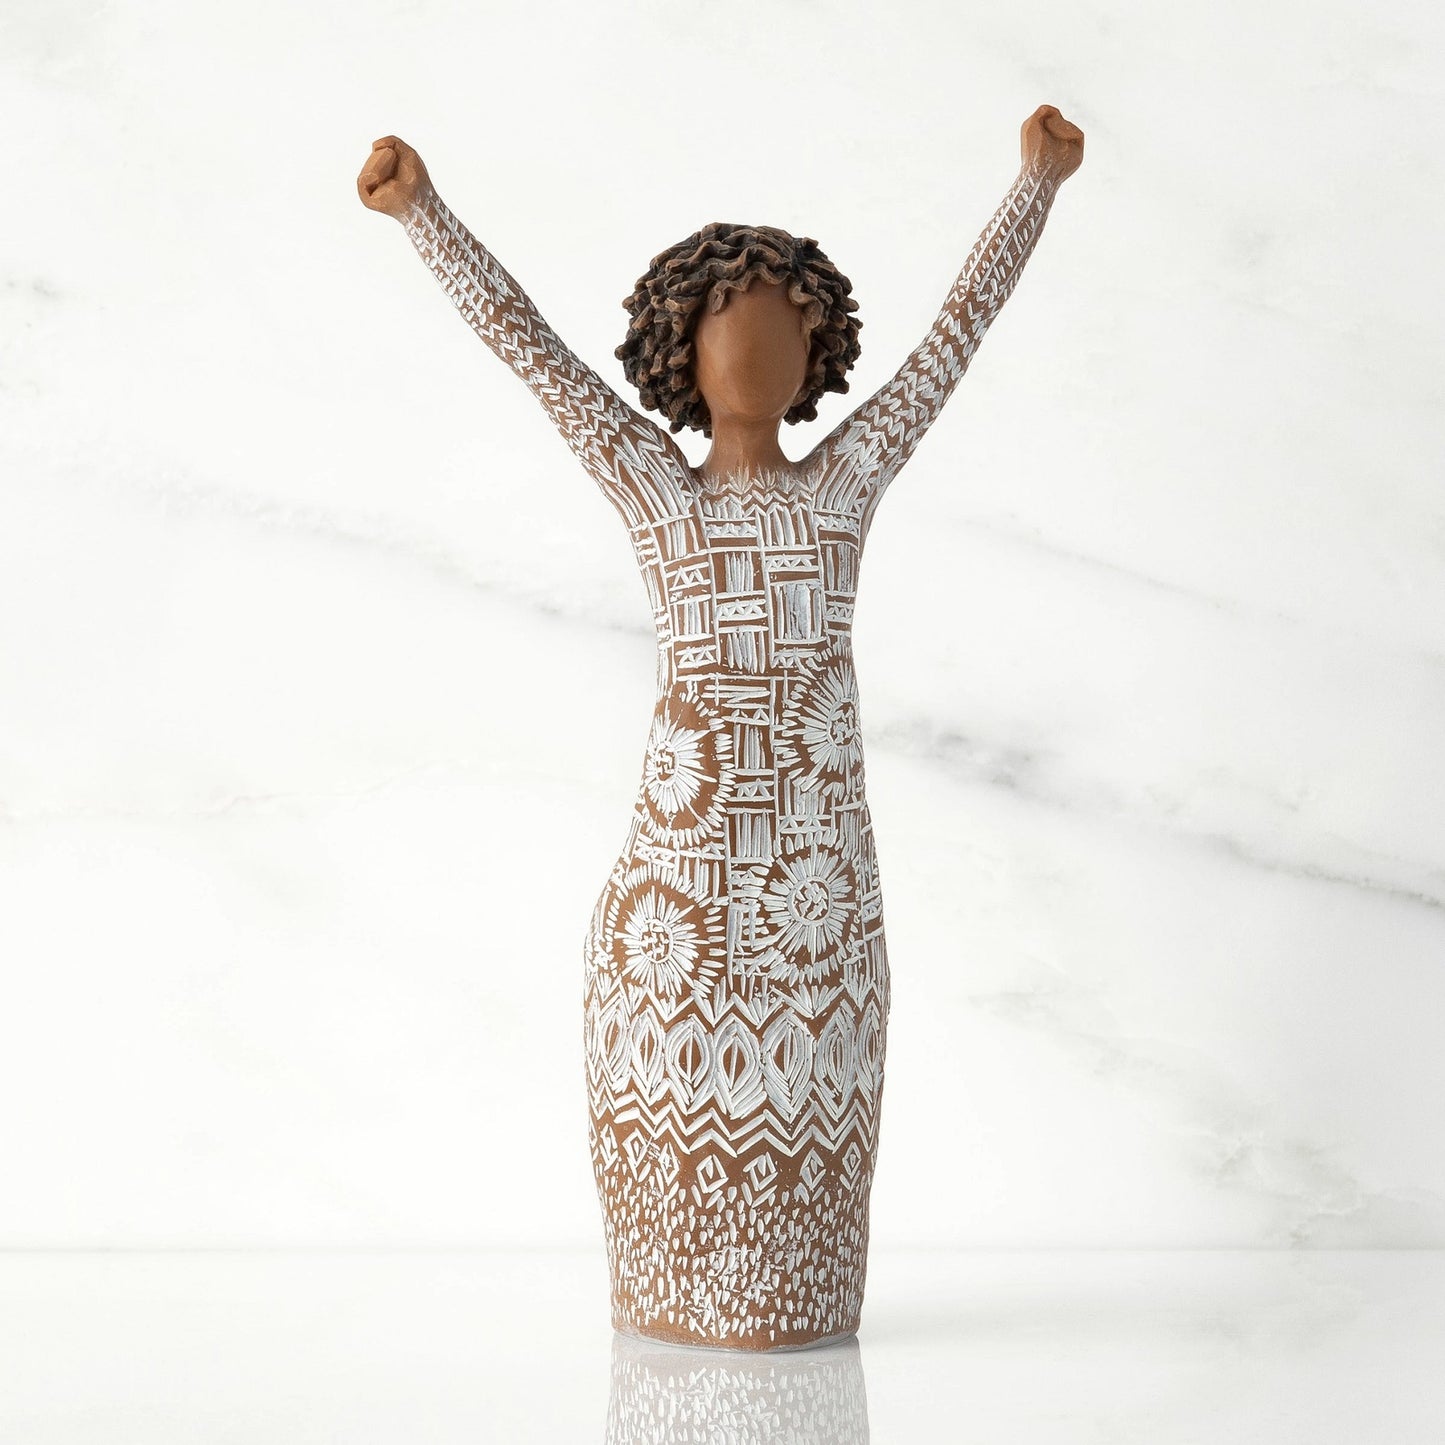 Courageous Joy Figurine